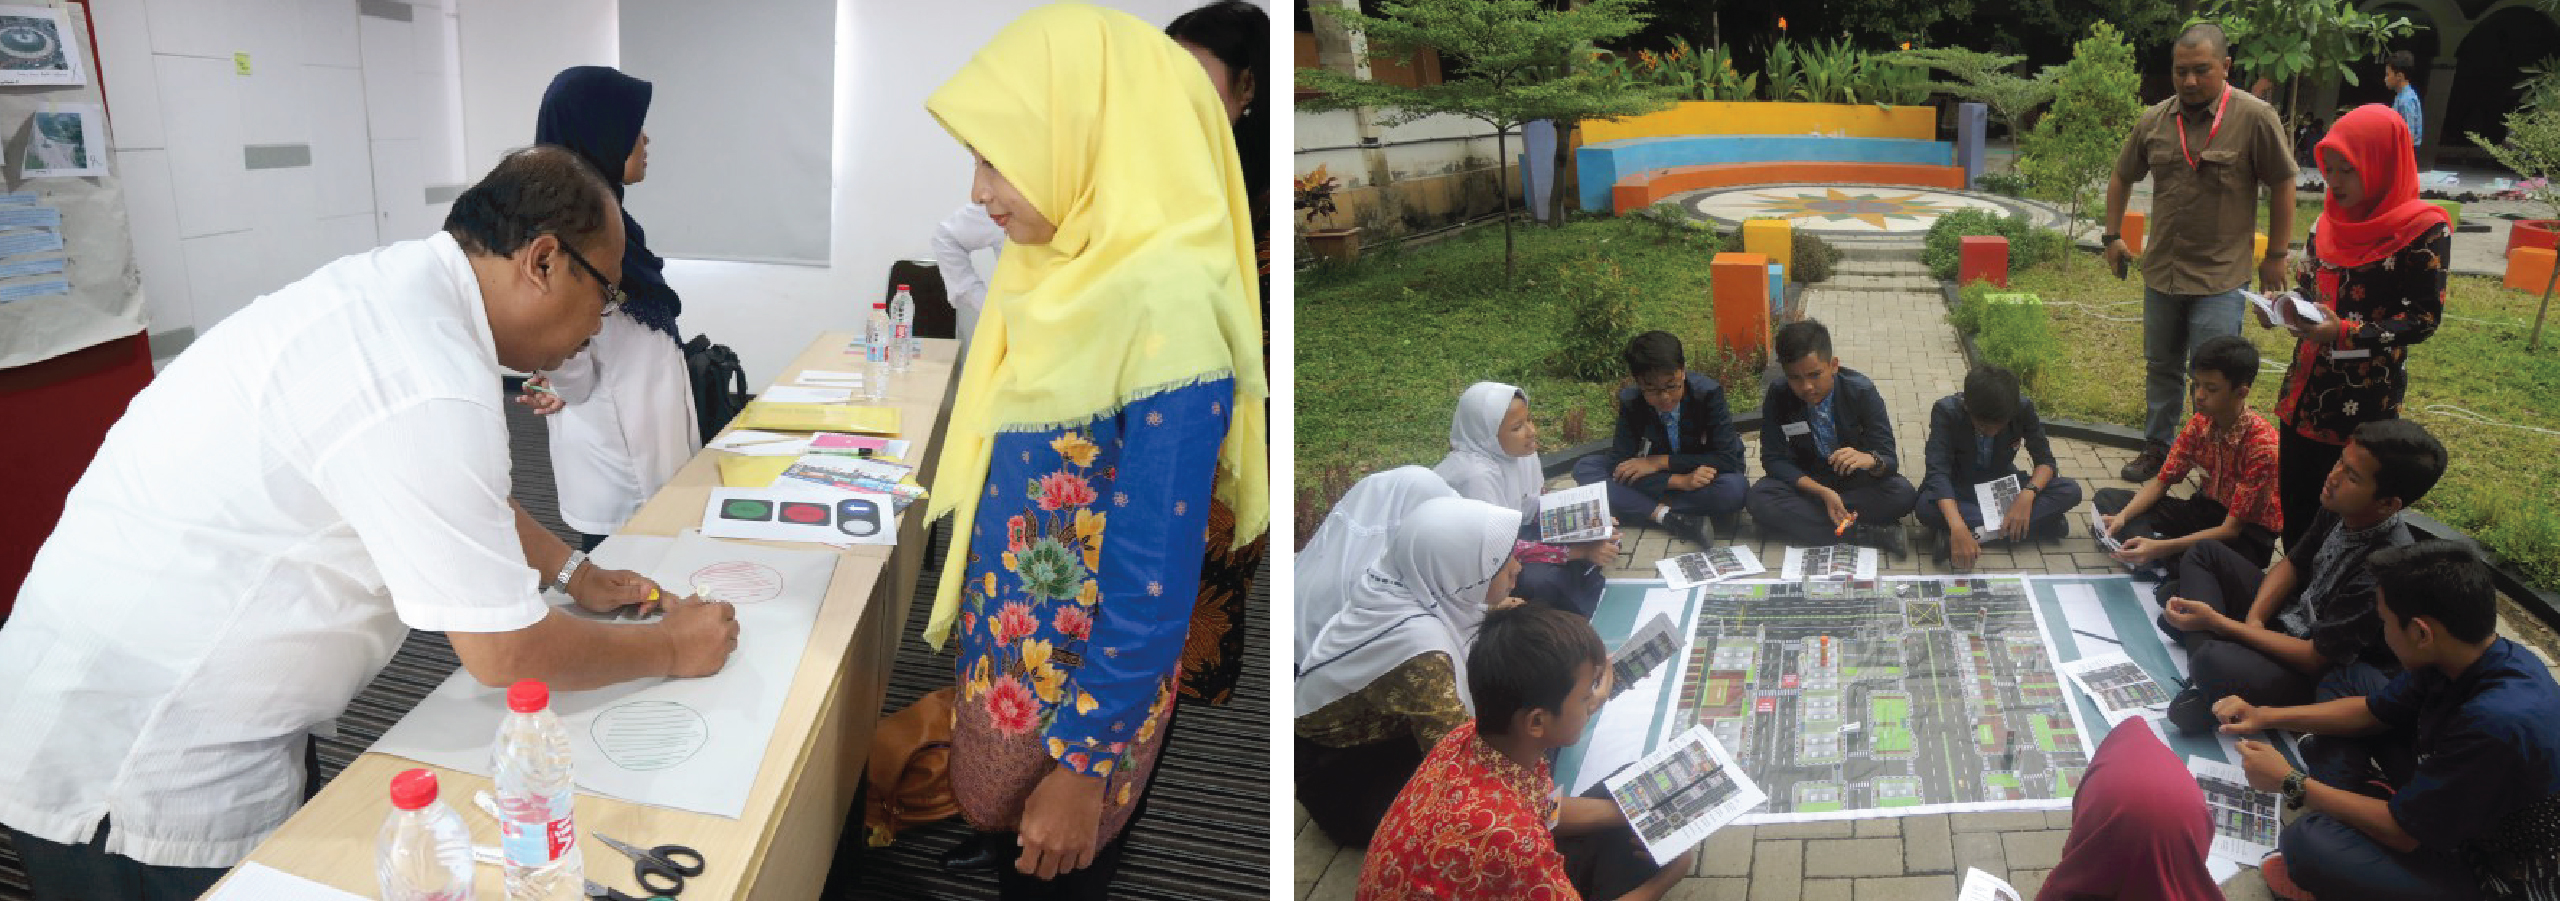 The Increasement Community Interest Program in Using the Public Transport in Semarang City